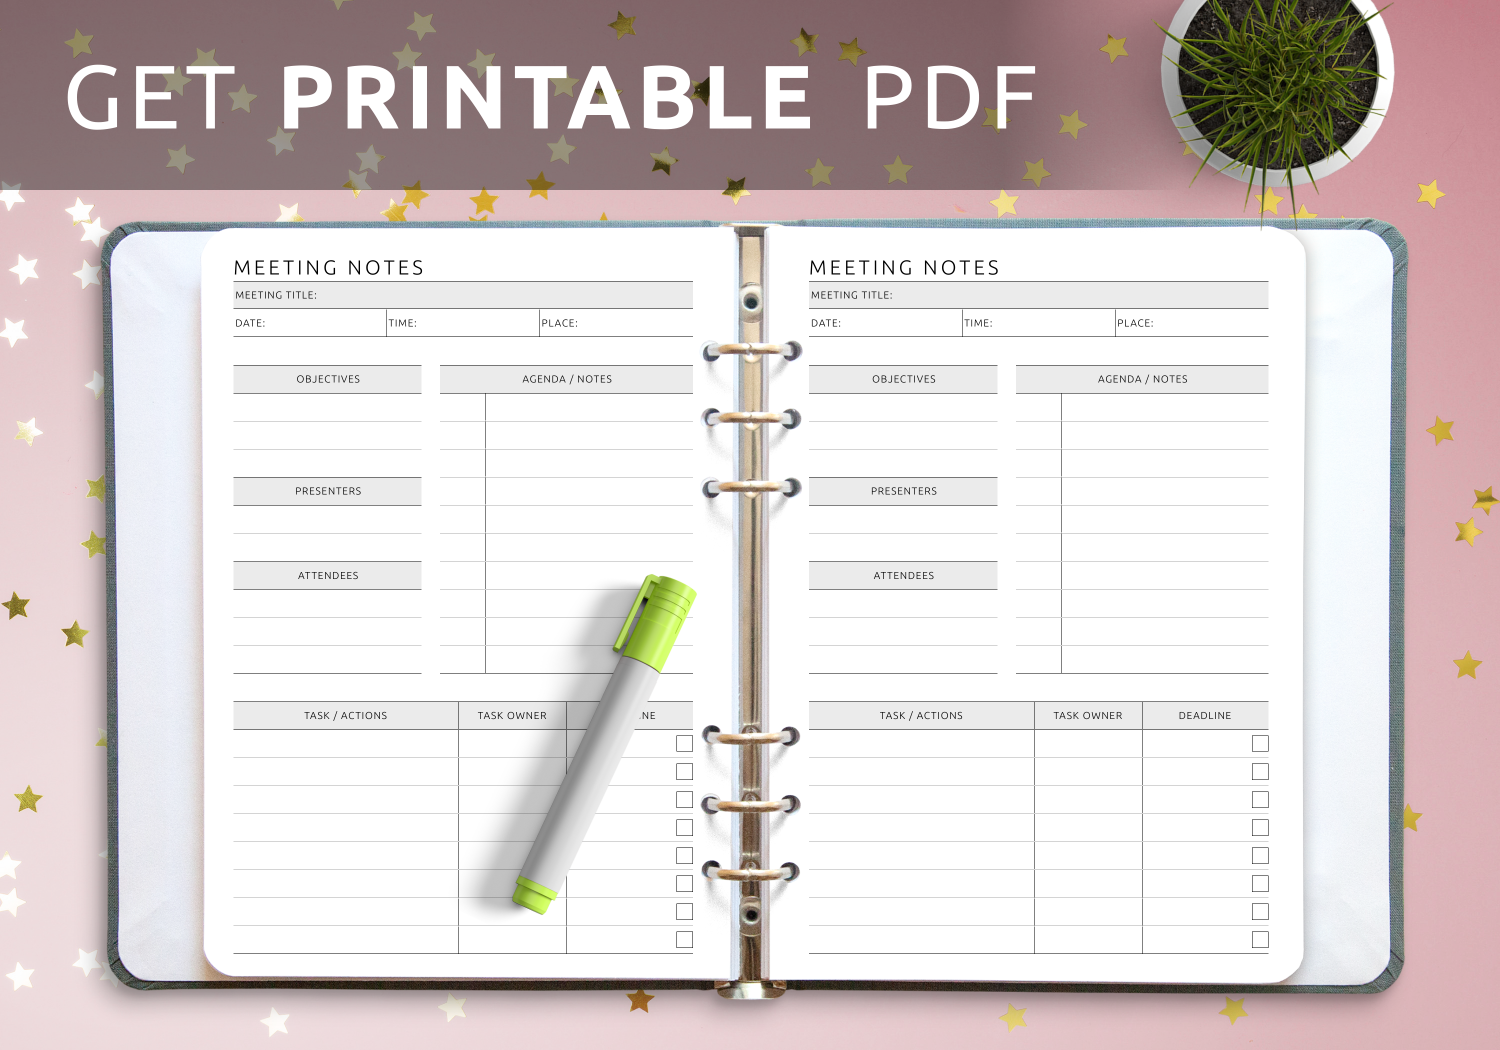 Zending verdieping Vergoeding Download Printable Meeting Agenda and Notes Template PDF